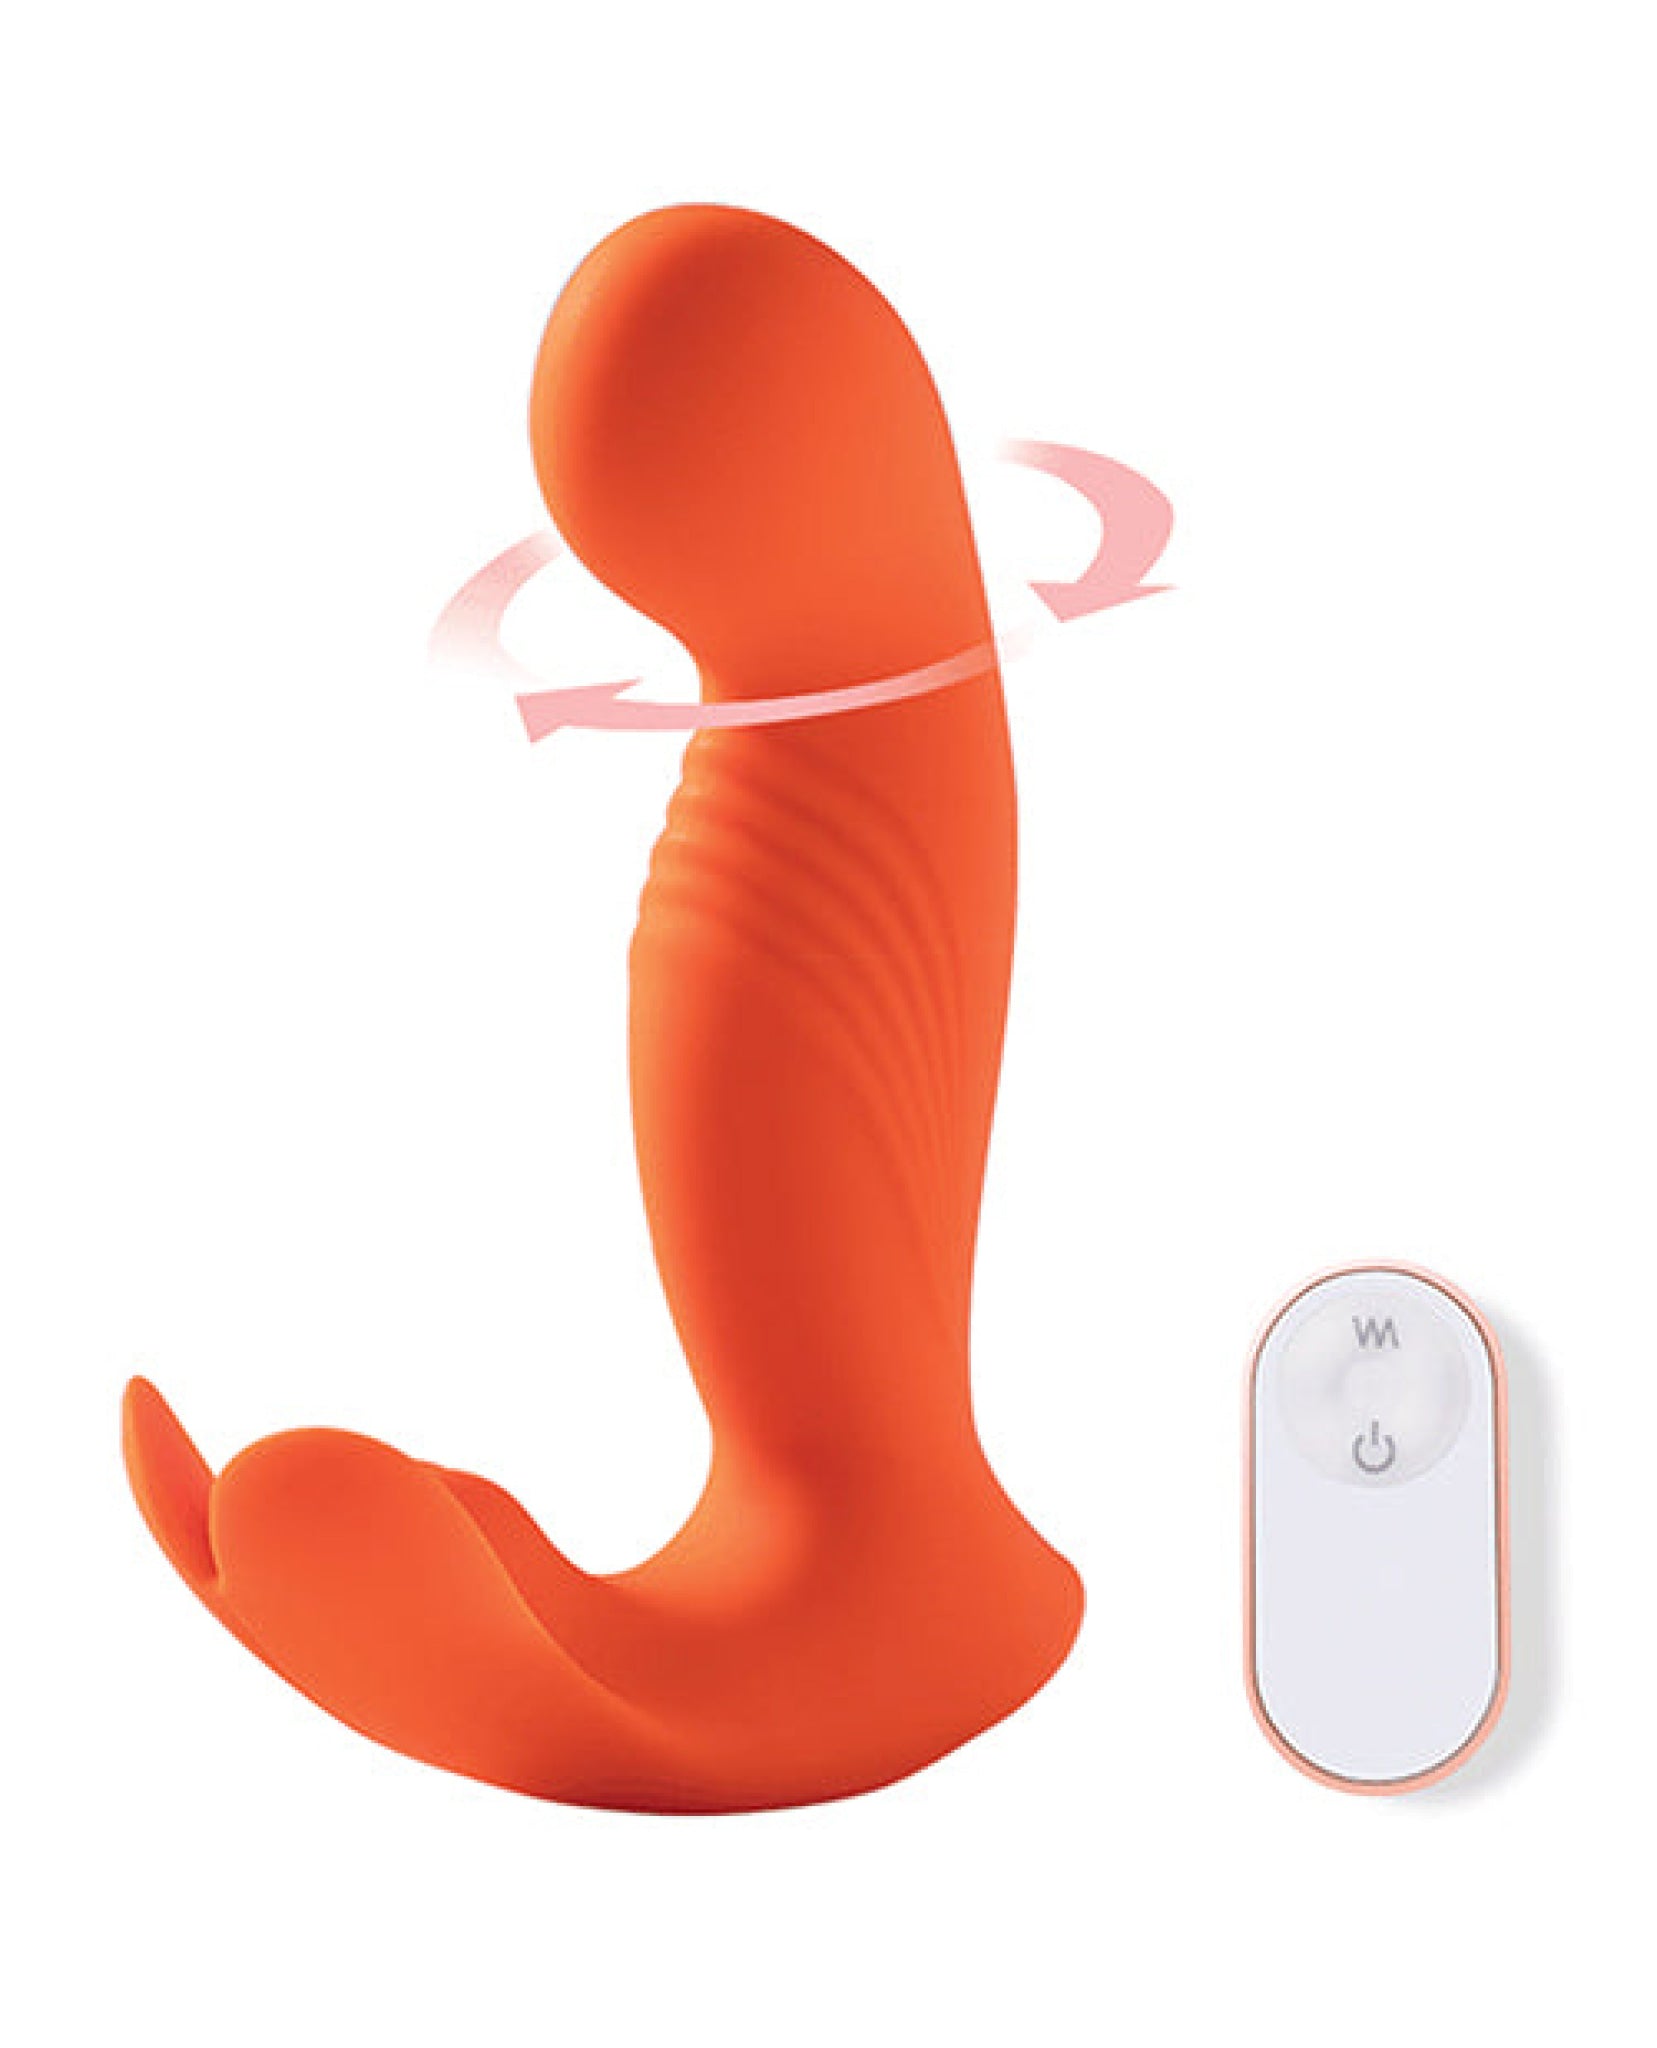 Crave 3 G-spot Vibrator With Rotating Massage Head & Clit Tickler - Orange Uc Global Trade